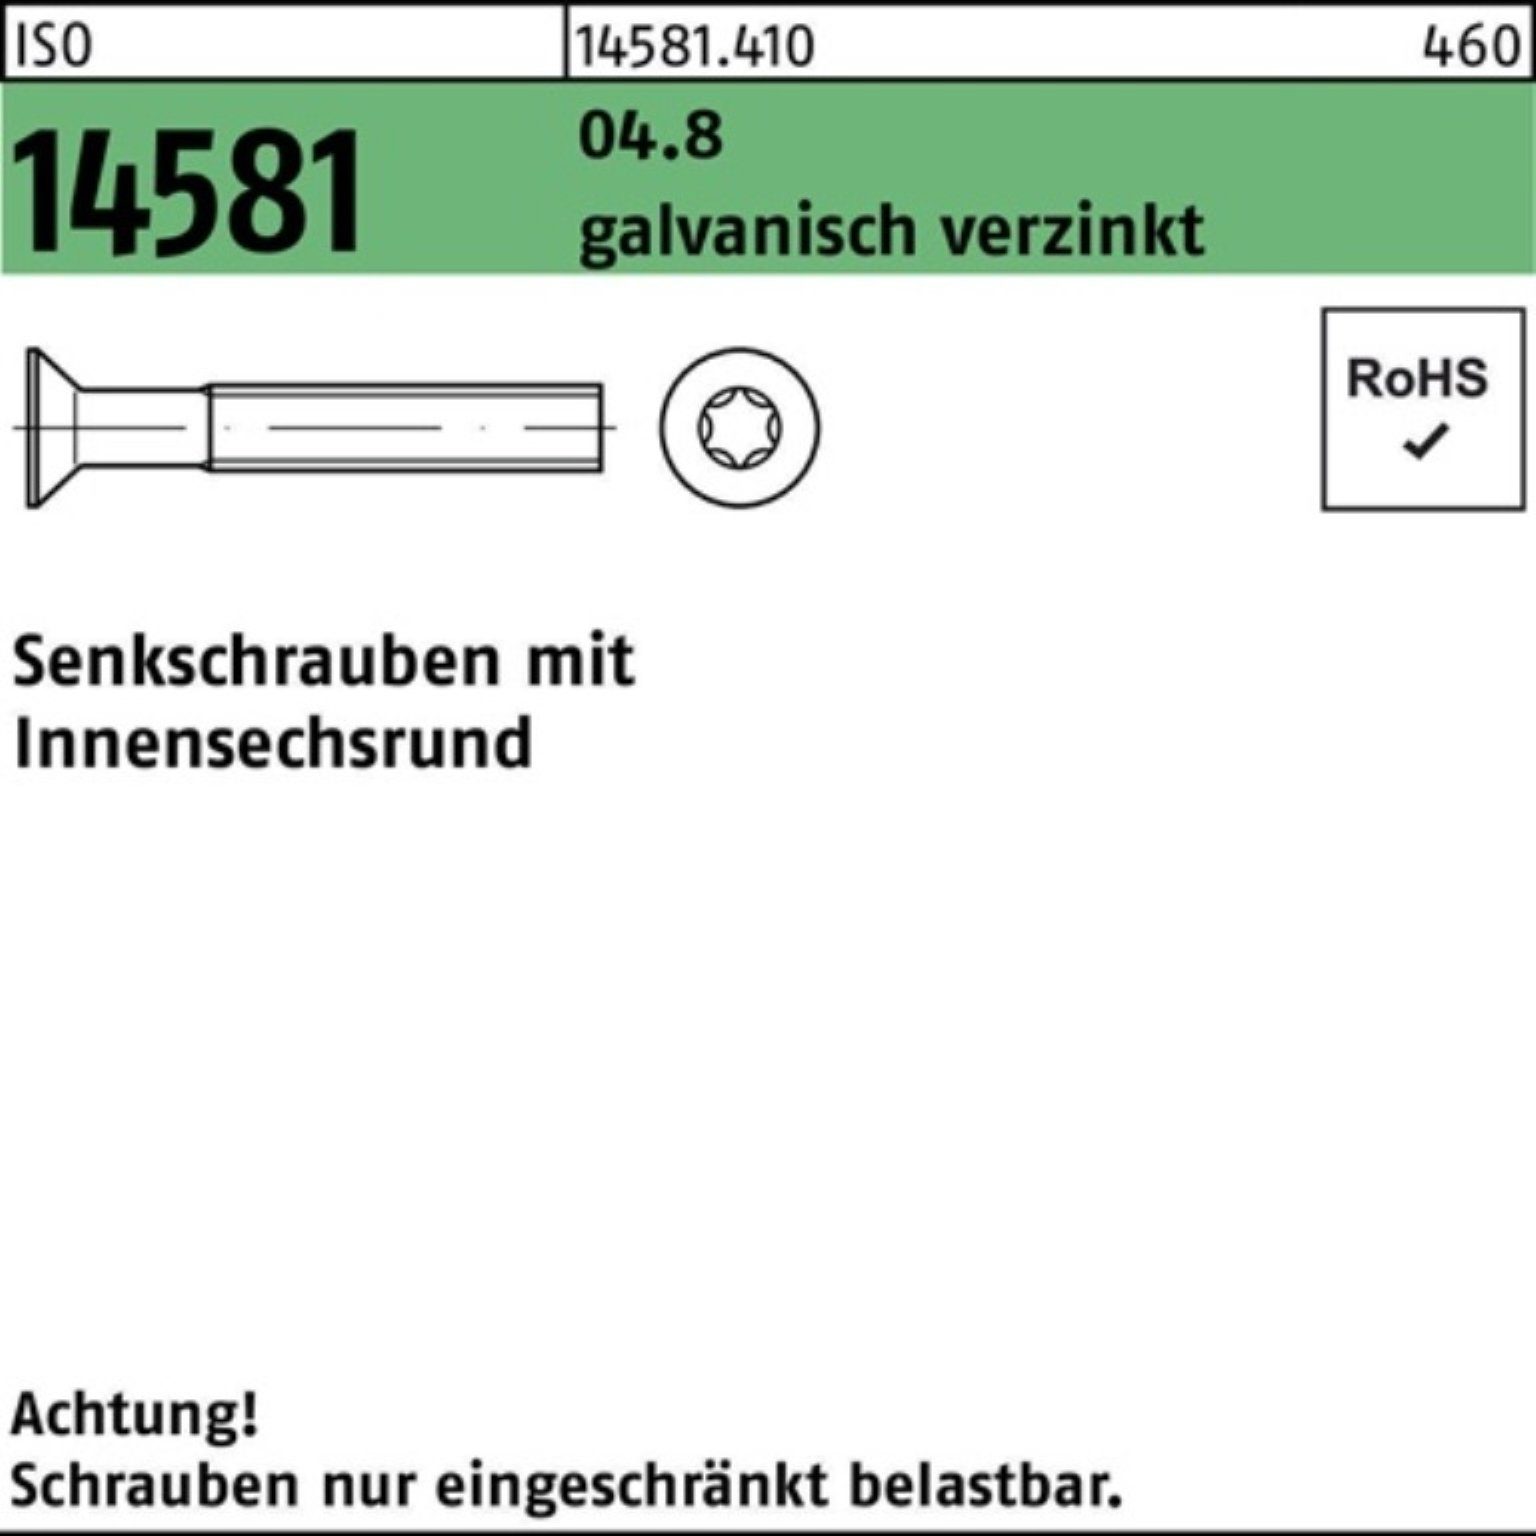 Reyher Senkschraube 1000er 14581 ISR galv.verz. 04.8 1000S ISO Senkschraube Pack T25 M5x30